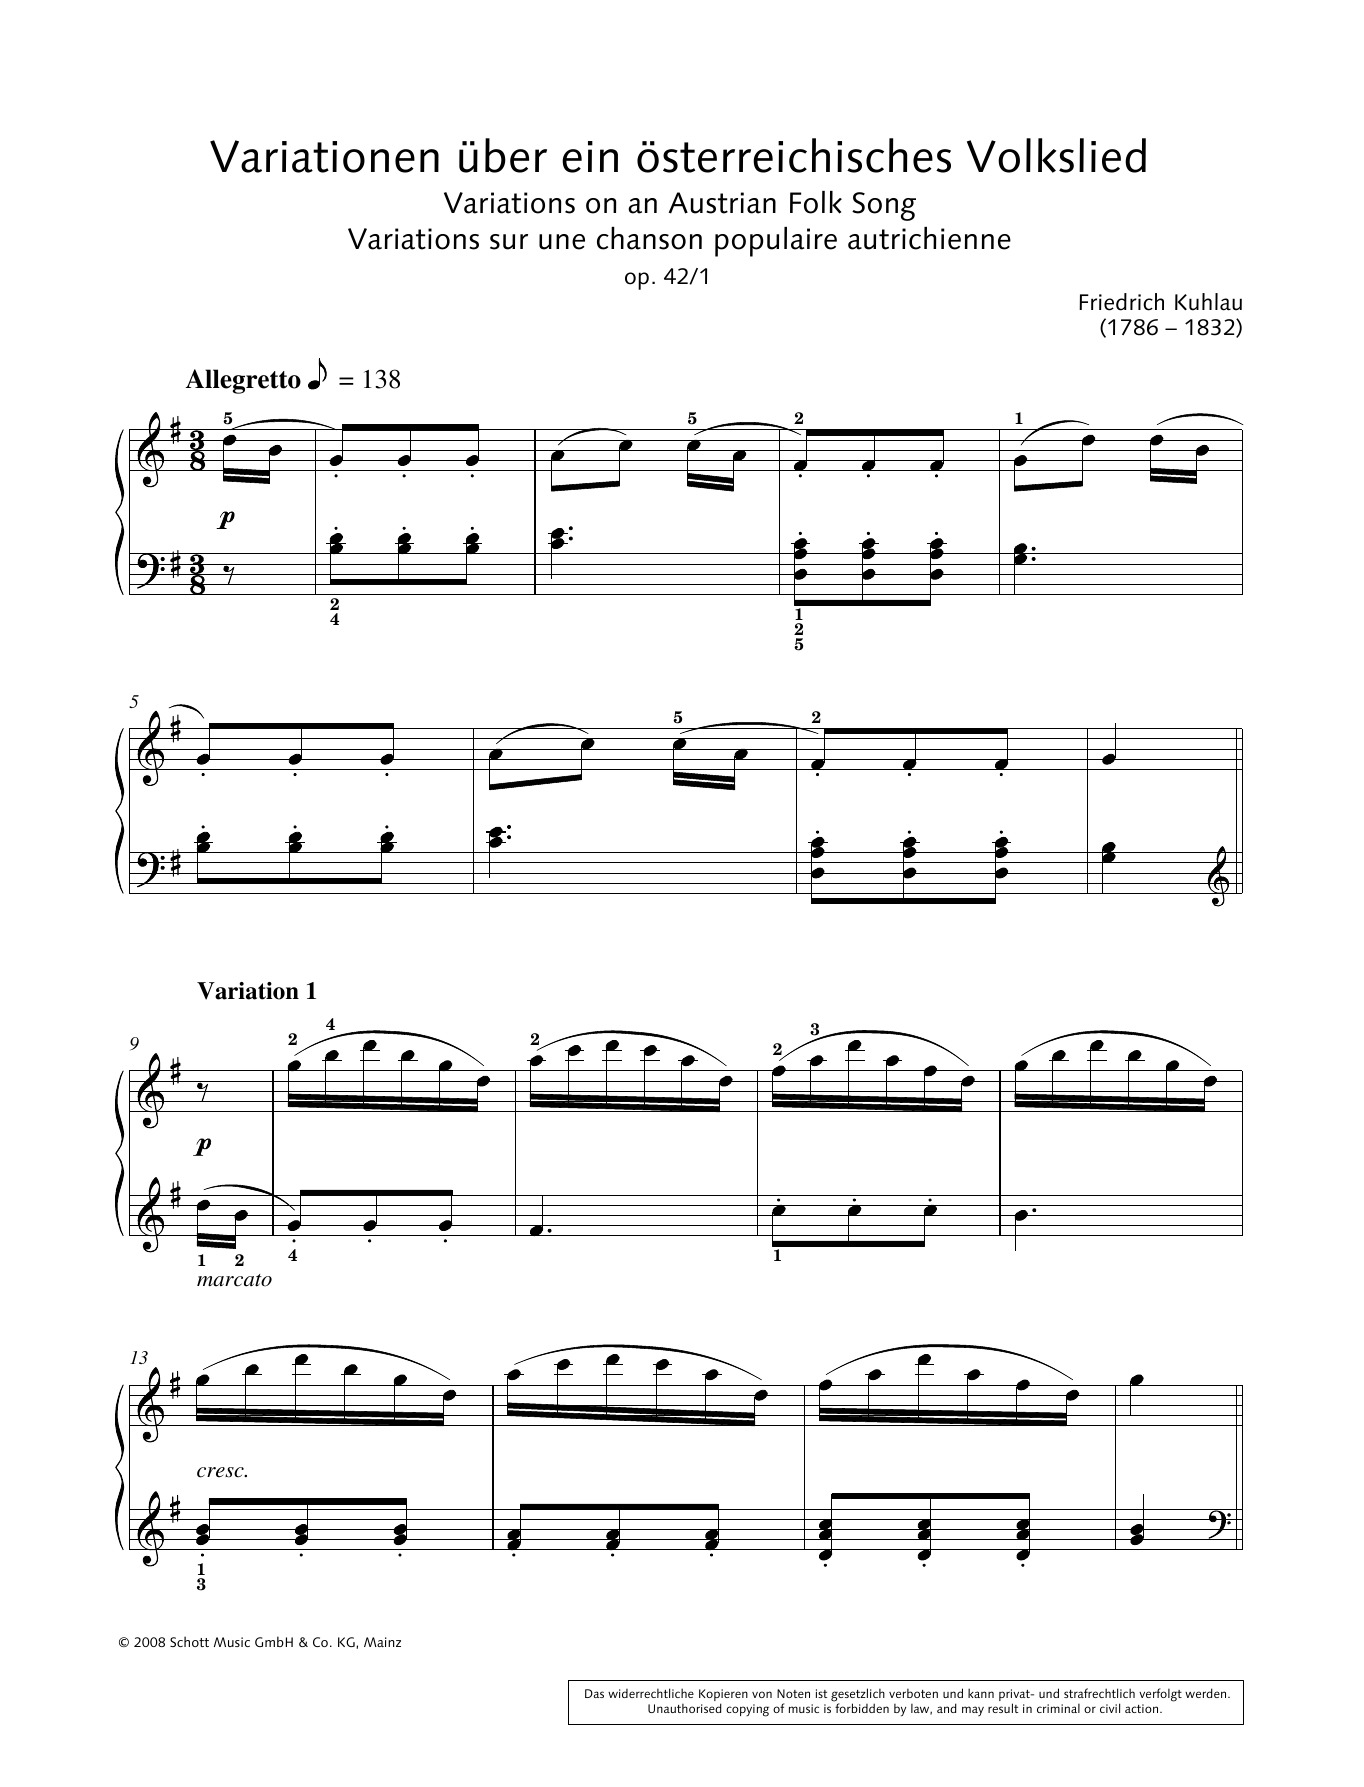 Hans-Gunter Heumann Variations on an Austrian Folk Song Sheet Music Notes & Chords for Piano Solo - Download or Print PDF